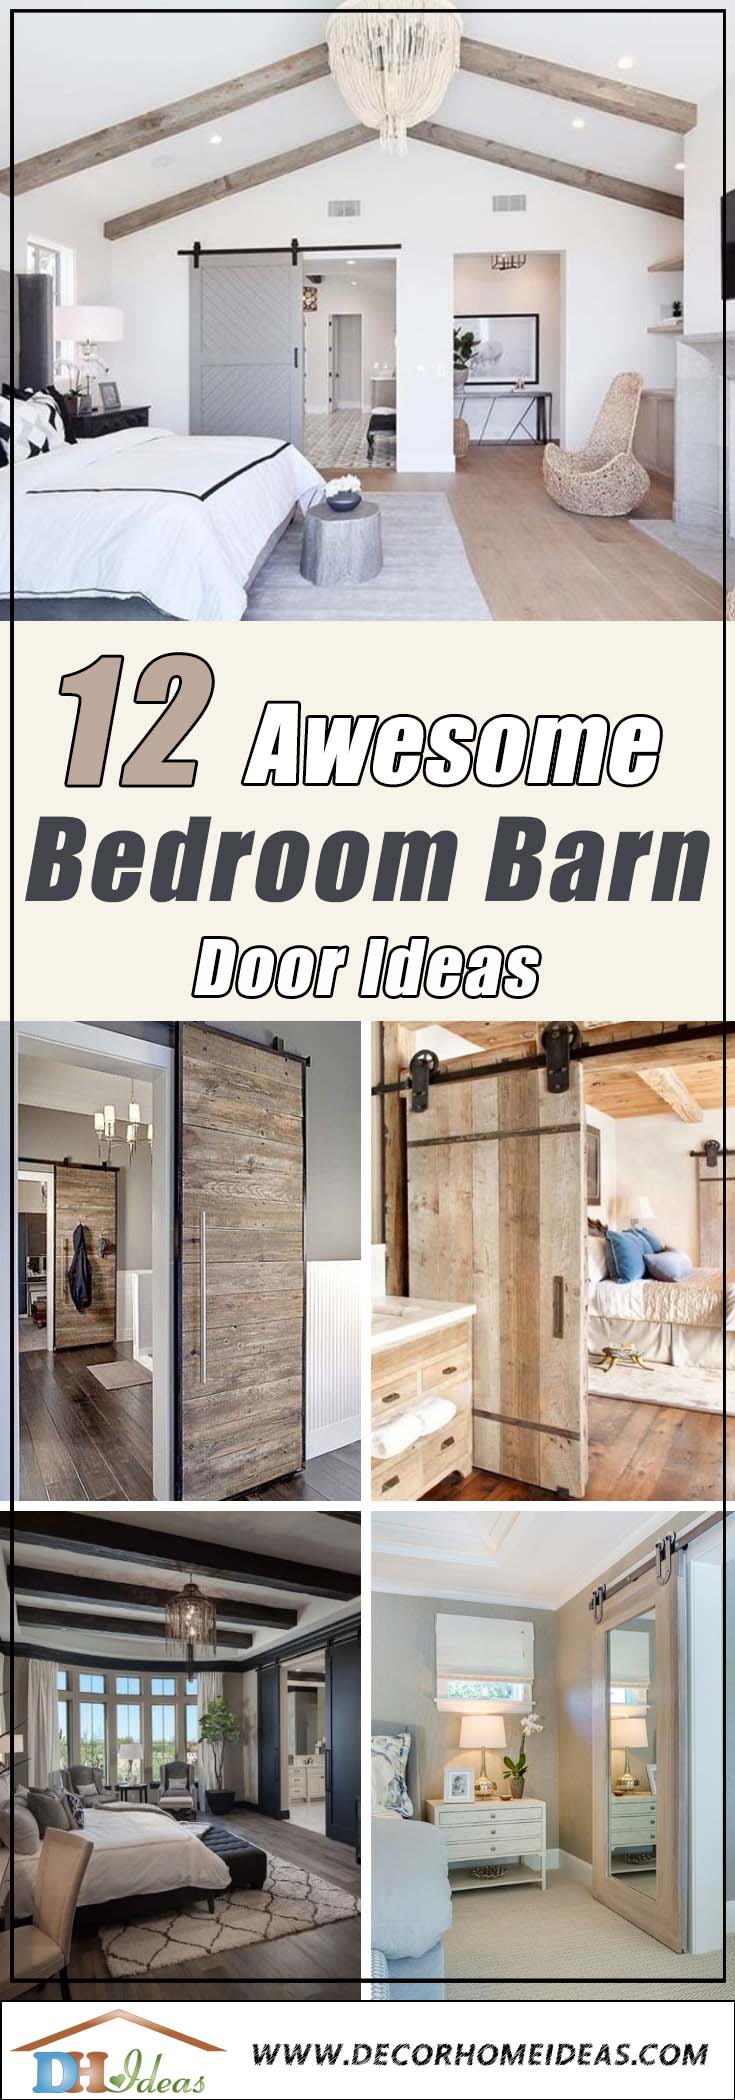 12 Awesome Bedroom Barn Door Ideas #barndoor #bedroom #homedecor #decorhomeideas